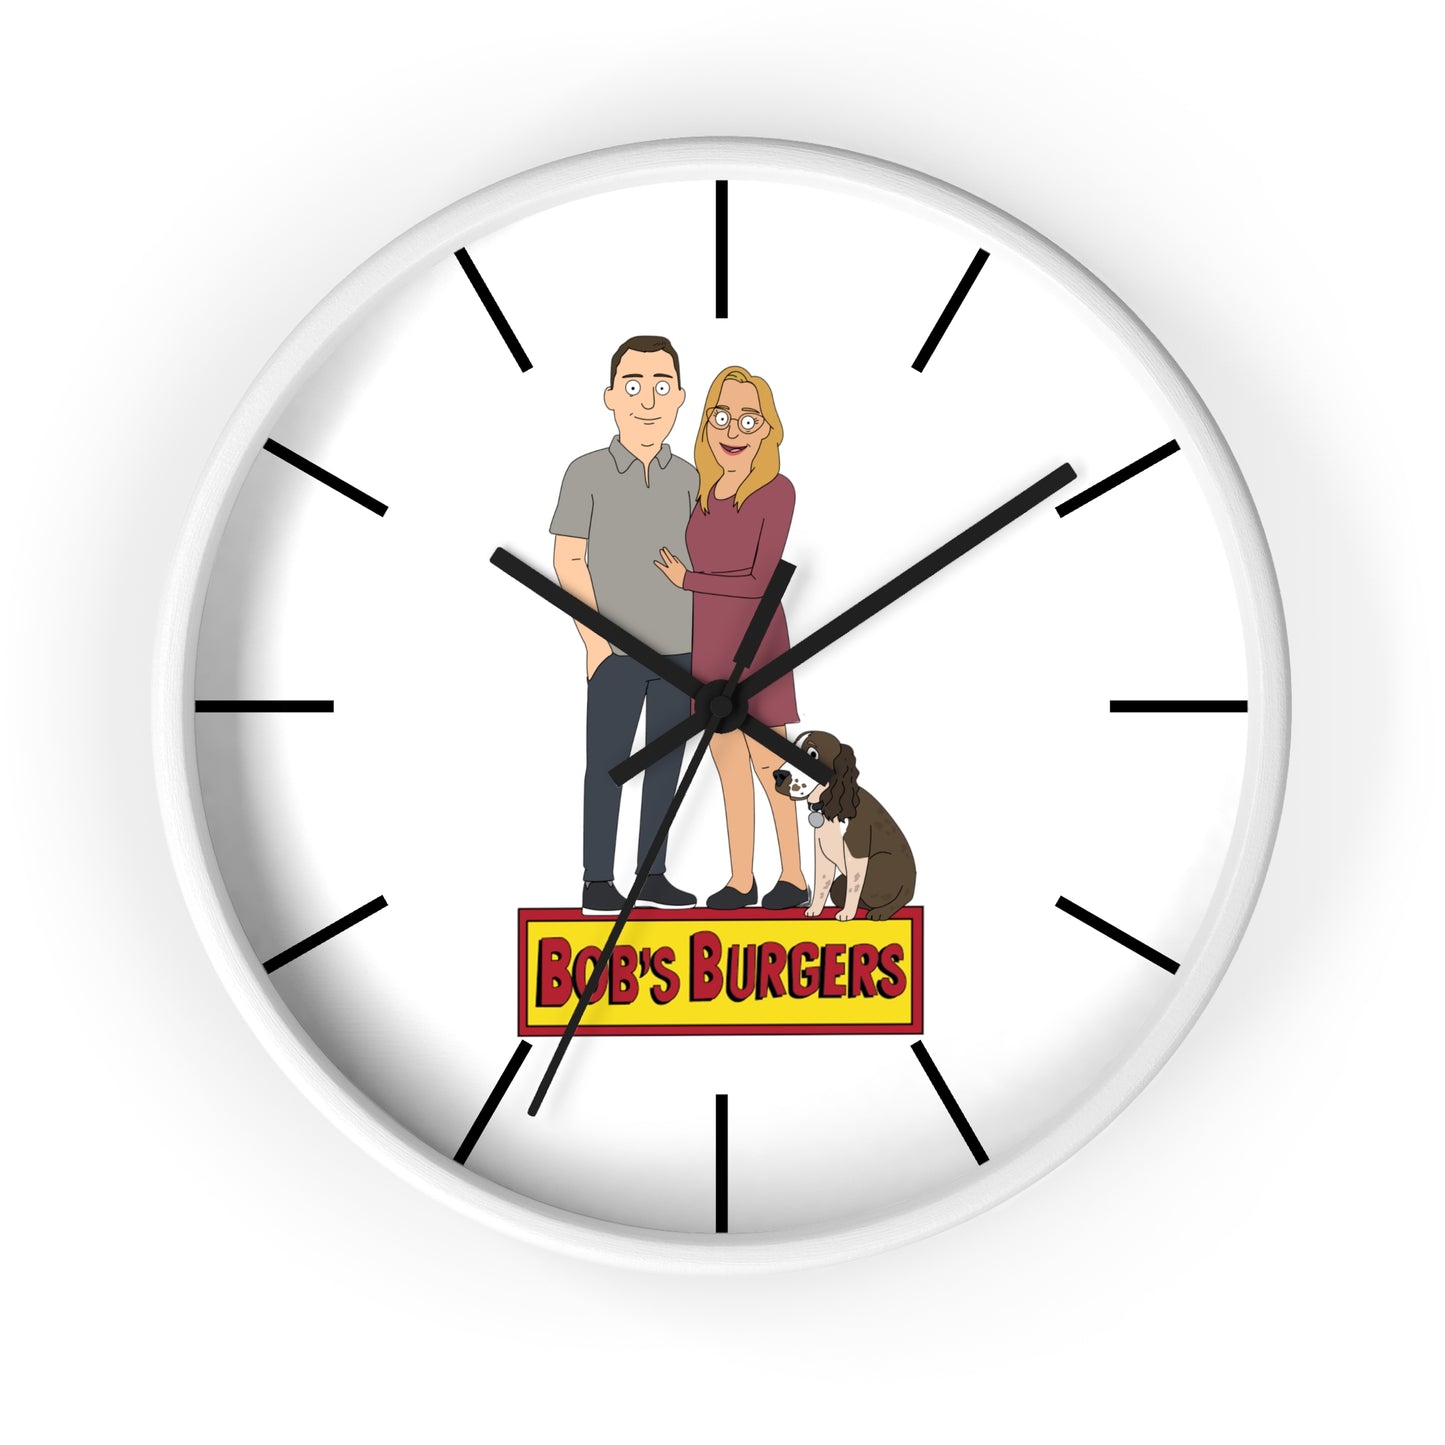 Personalized Wall clock - Just Like Bob Bob's Burgers